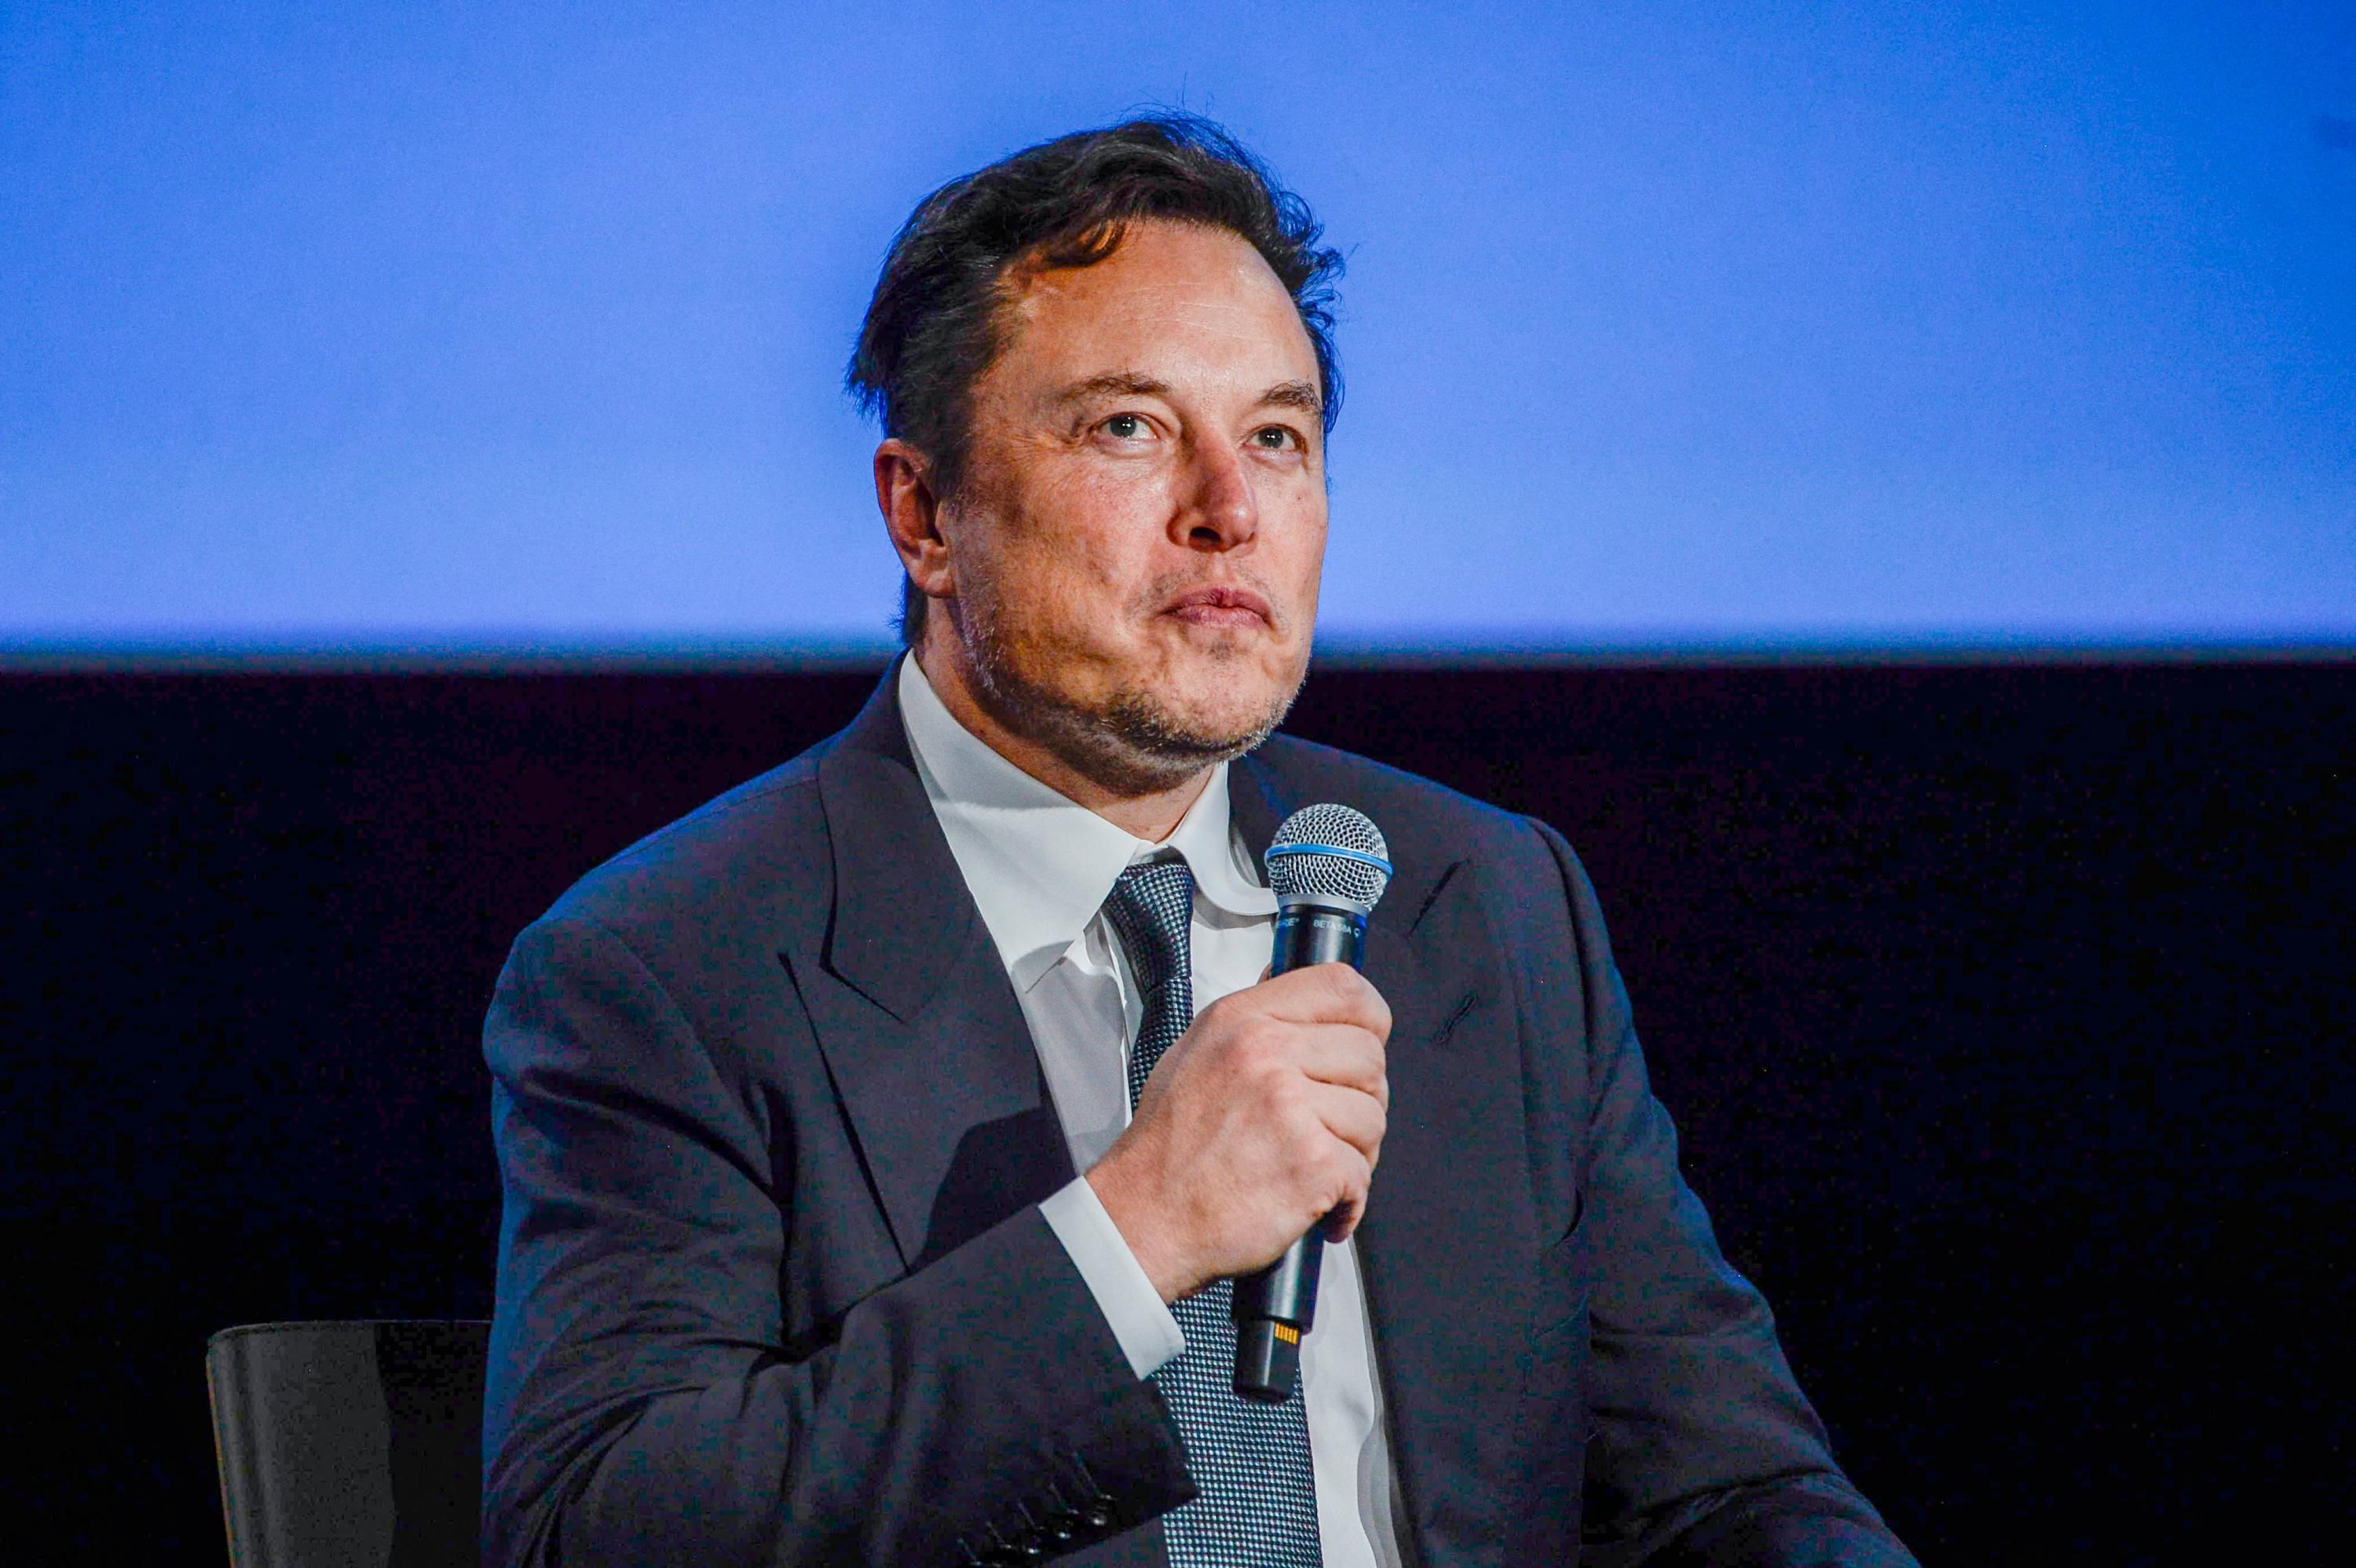 Elon Musk speaks to an audience